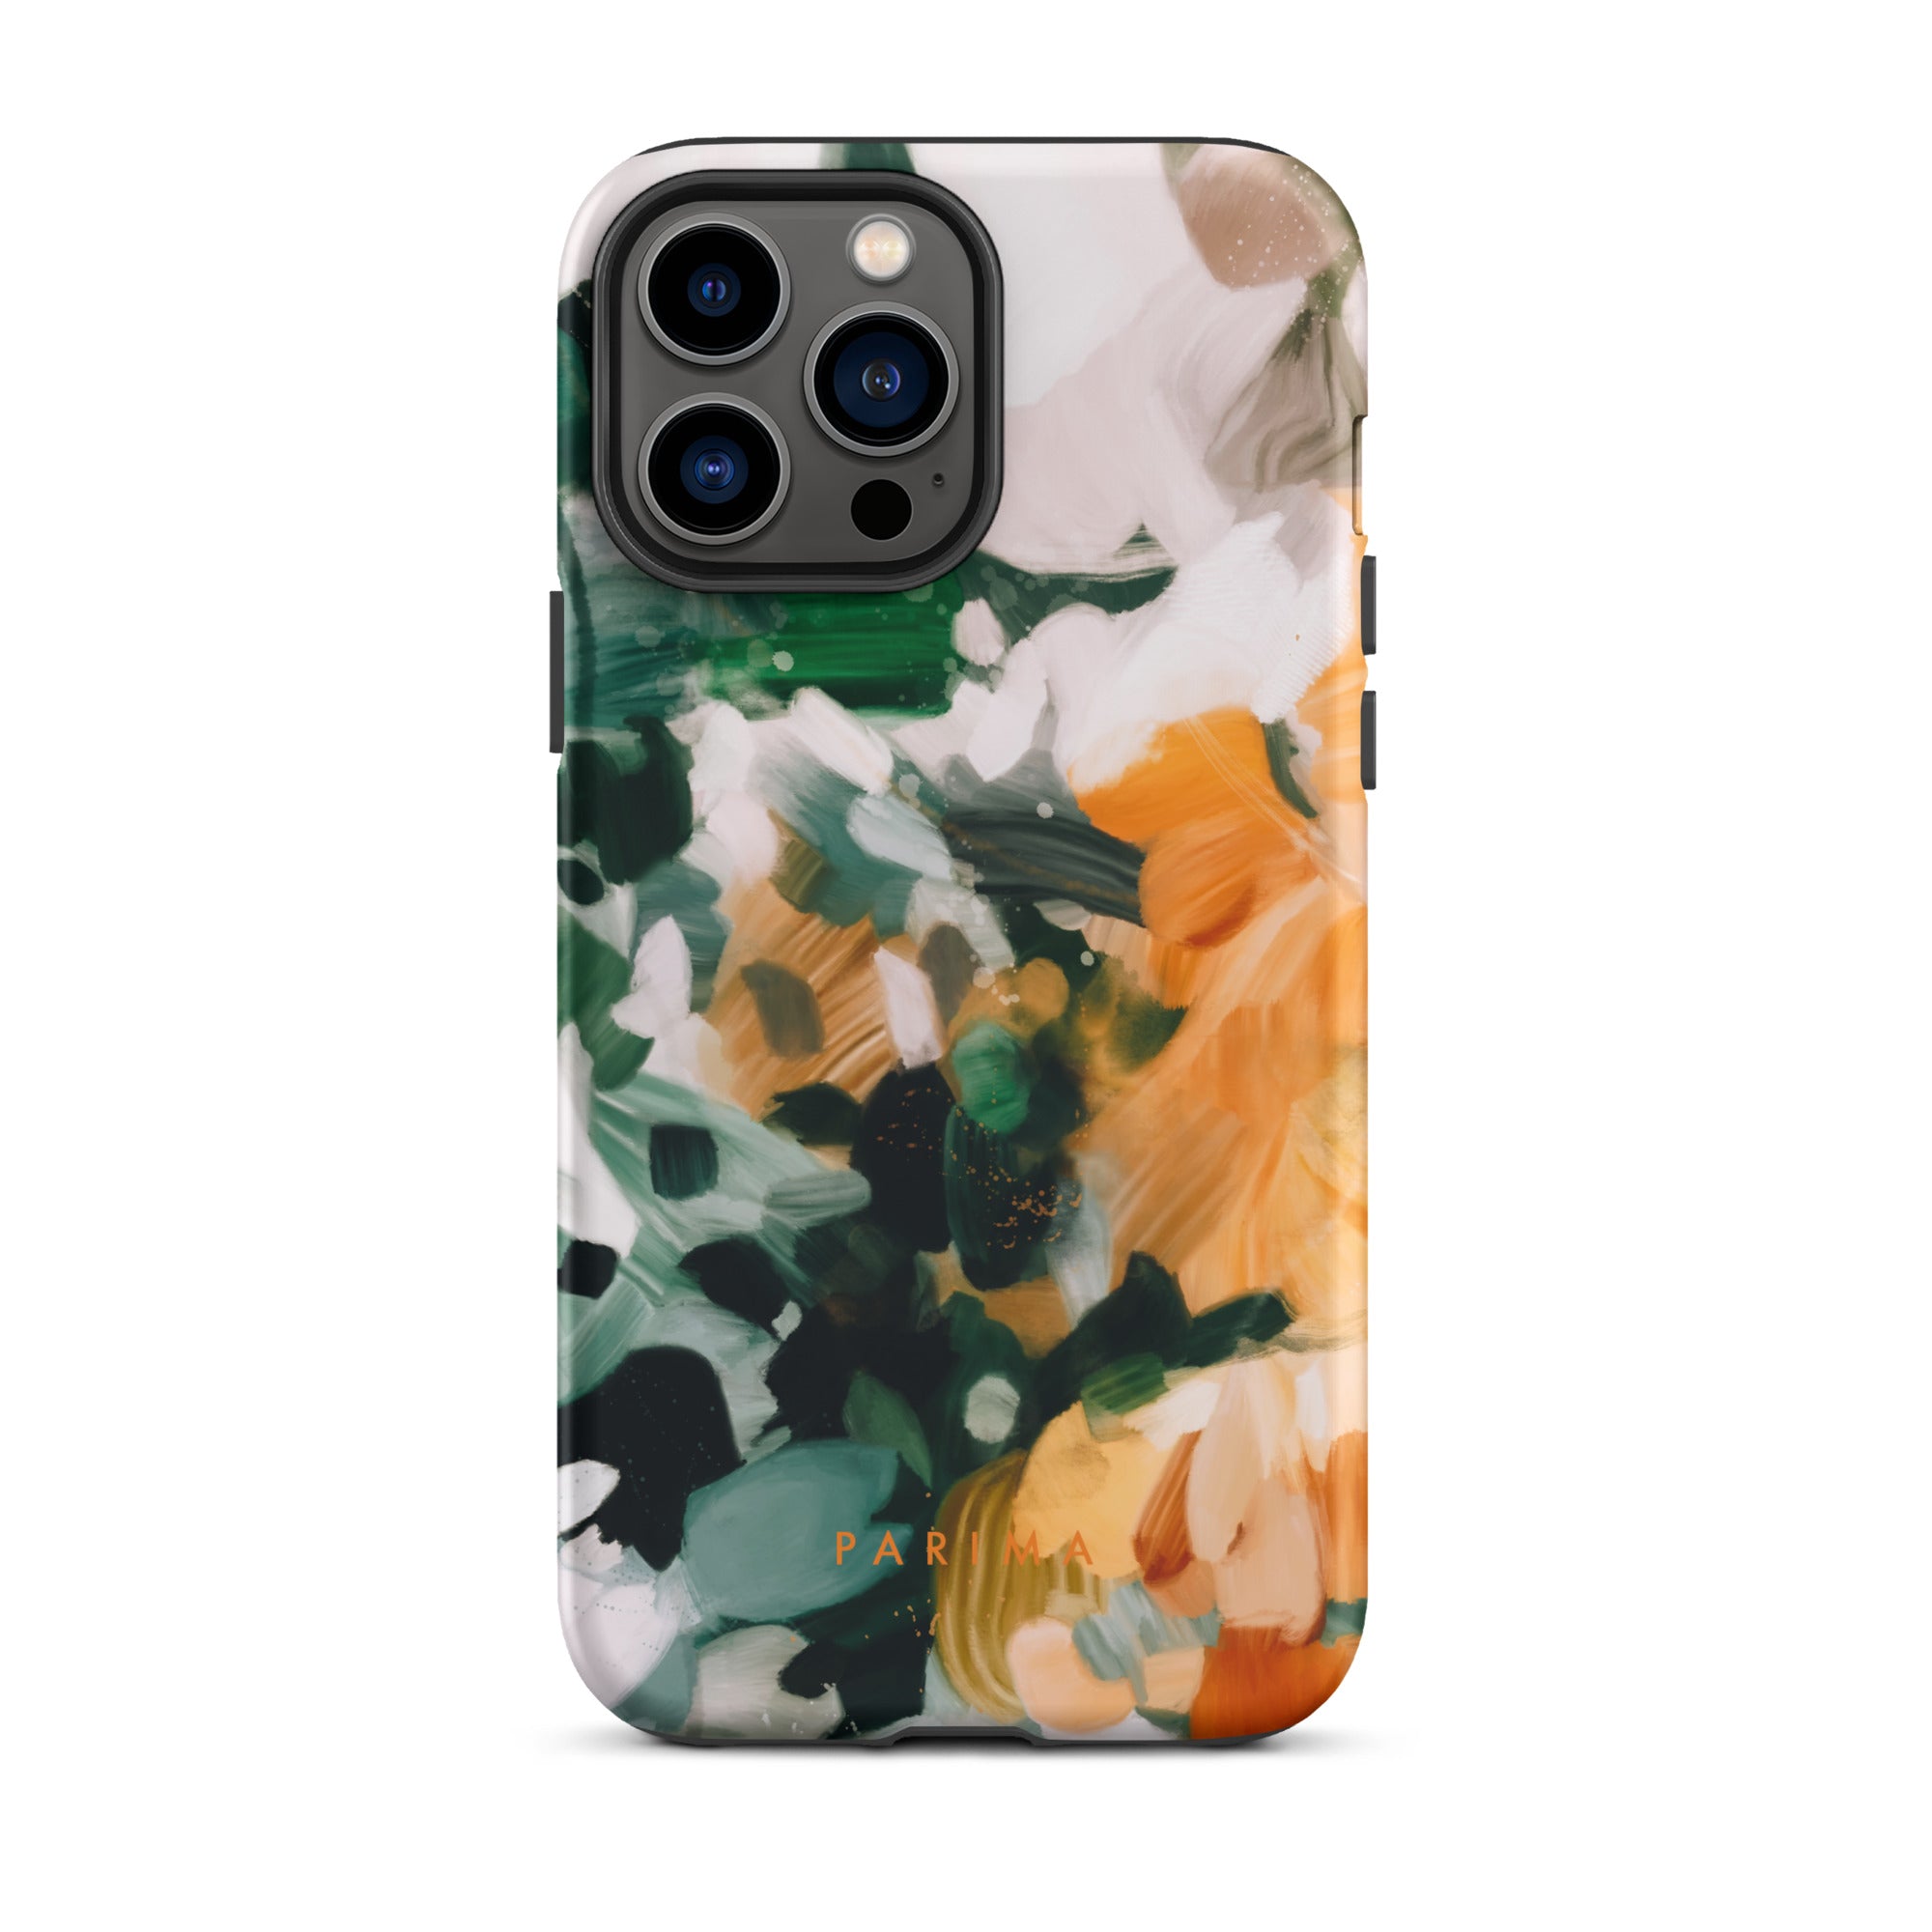 Aspen, green and orange abstract art - iPhone 13 Pro Max tough case by Parima Studio